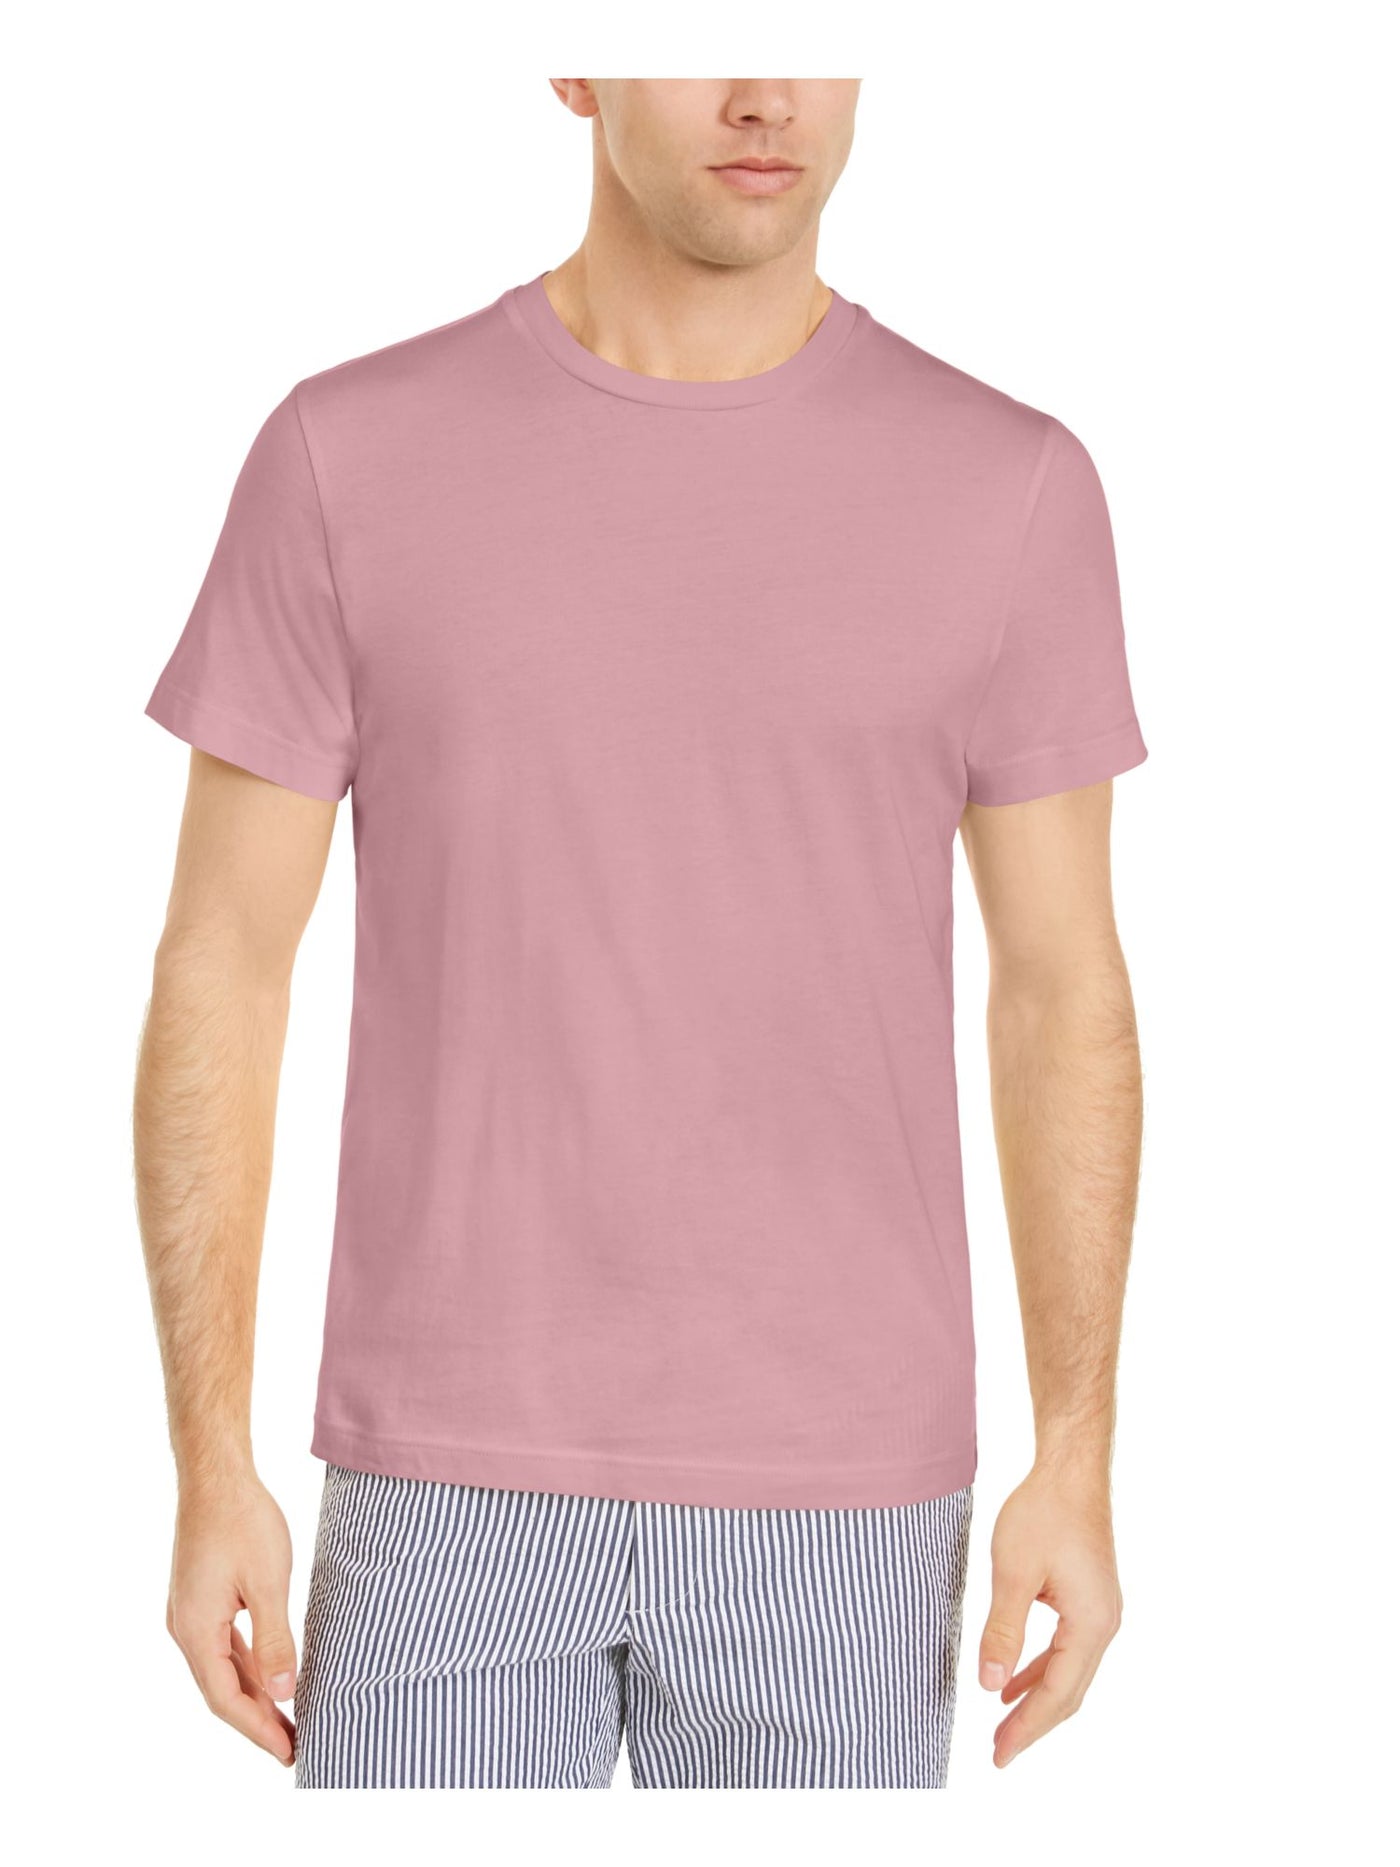 CLUBROOM Mens Purple Classic Fit Cotton T-Shirt S